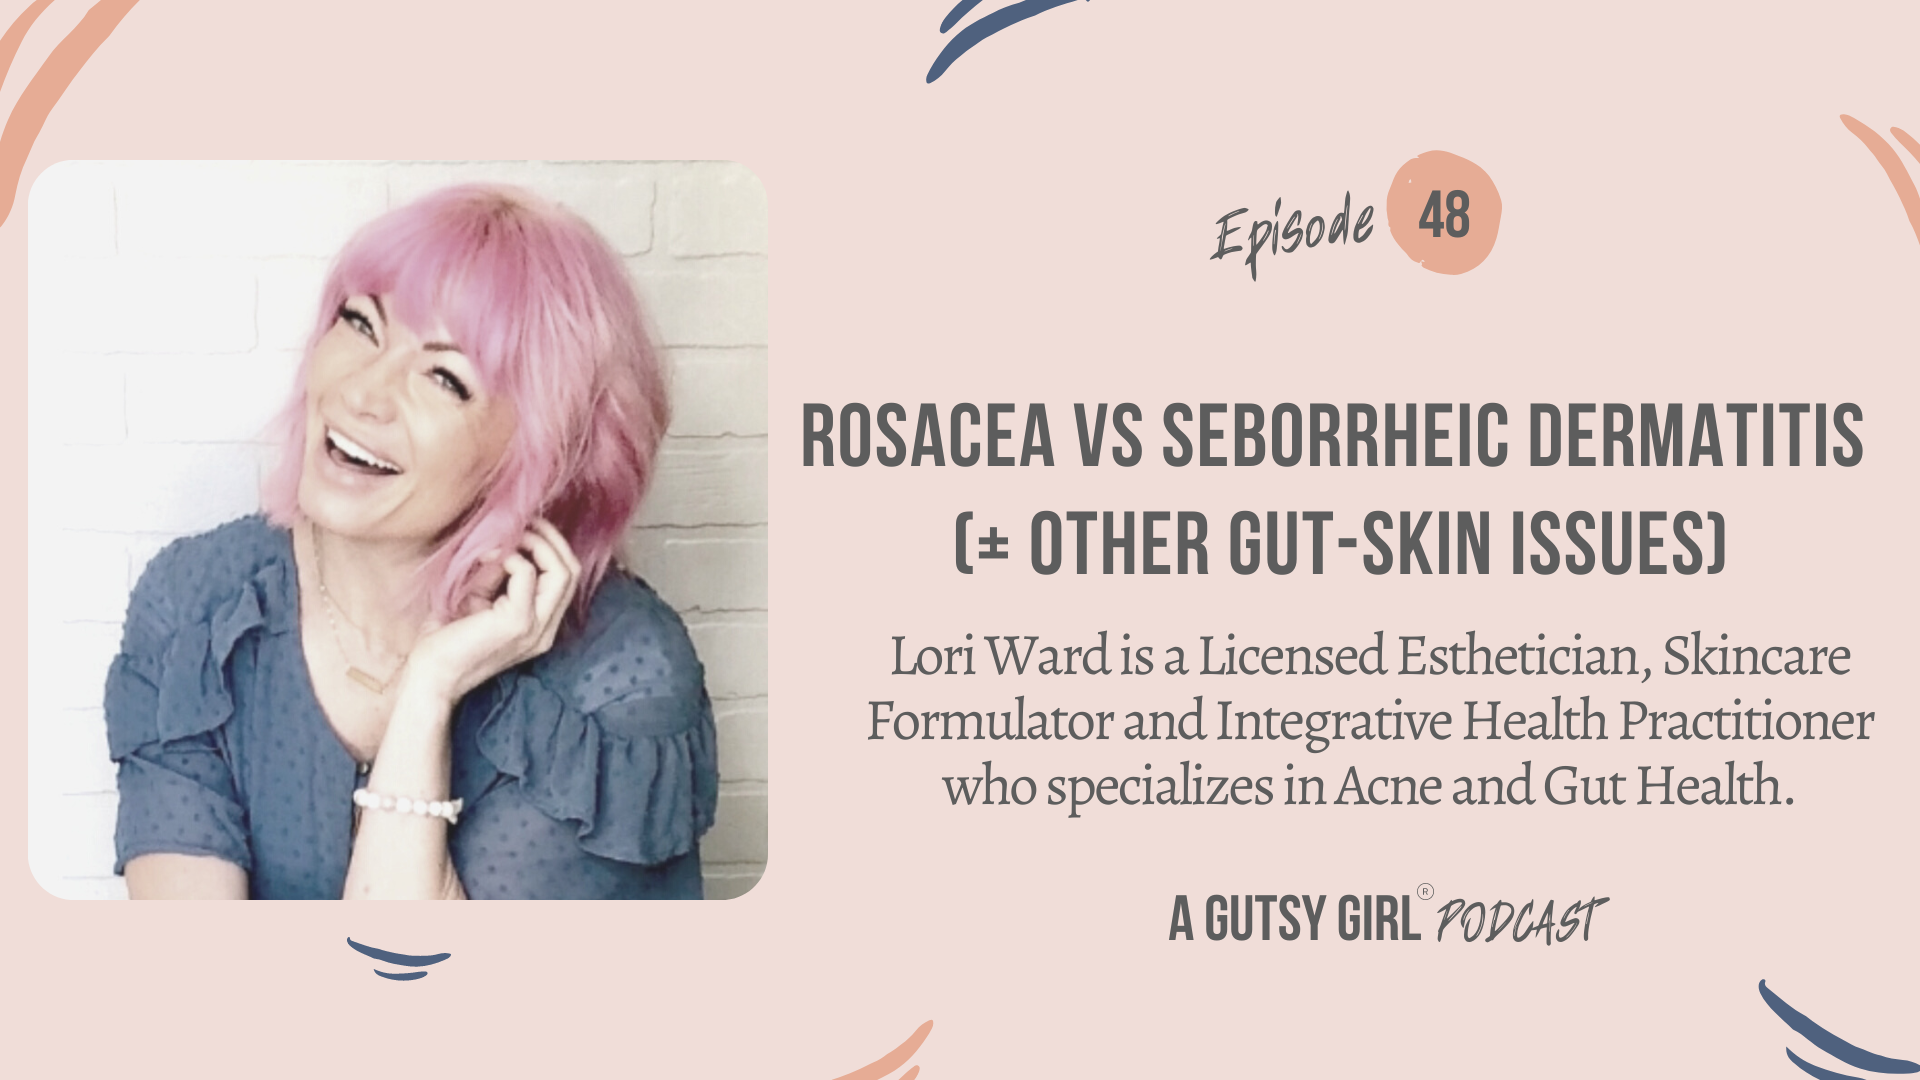 Rosacea vs Seborrheic Dermatitis (+ other gut-skin issues): Podcast Episode 48